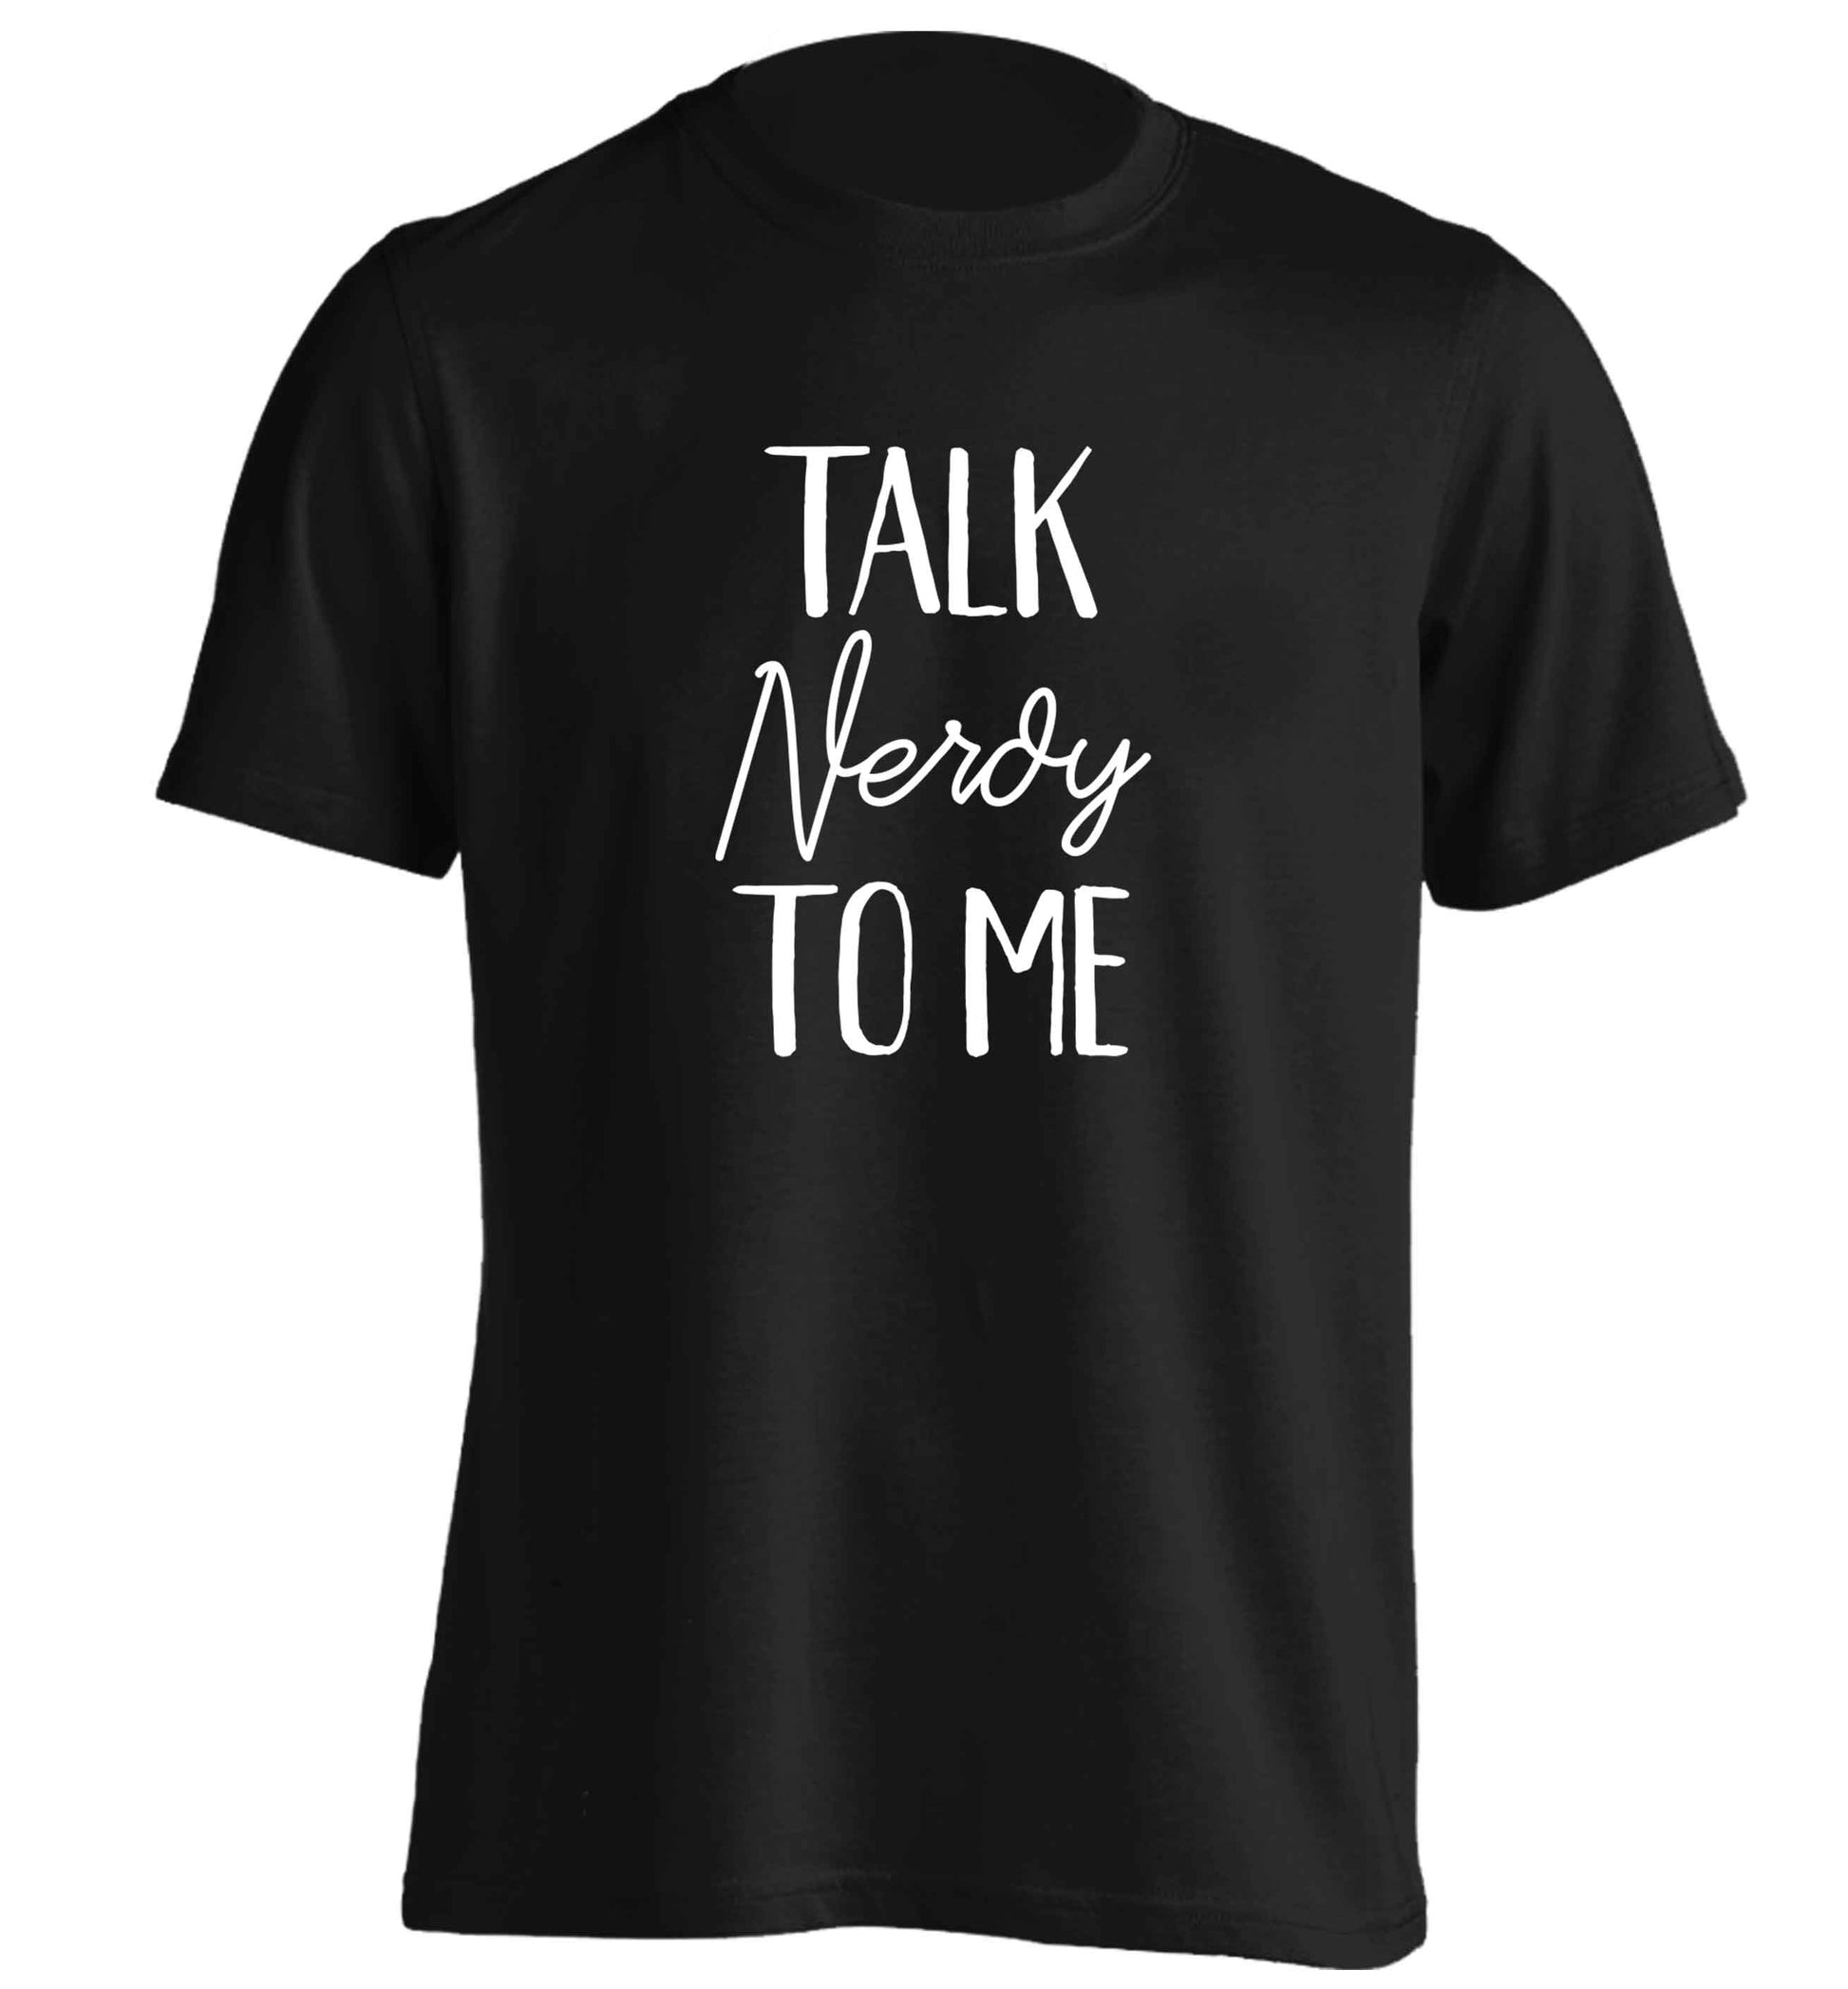 Talk nerdy to me adults unisex black Tshirt 2XL